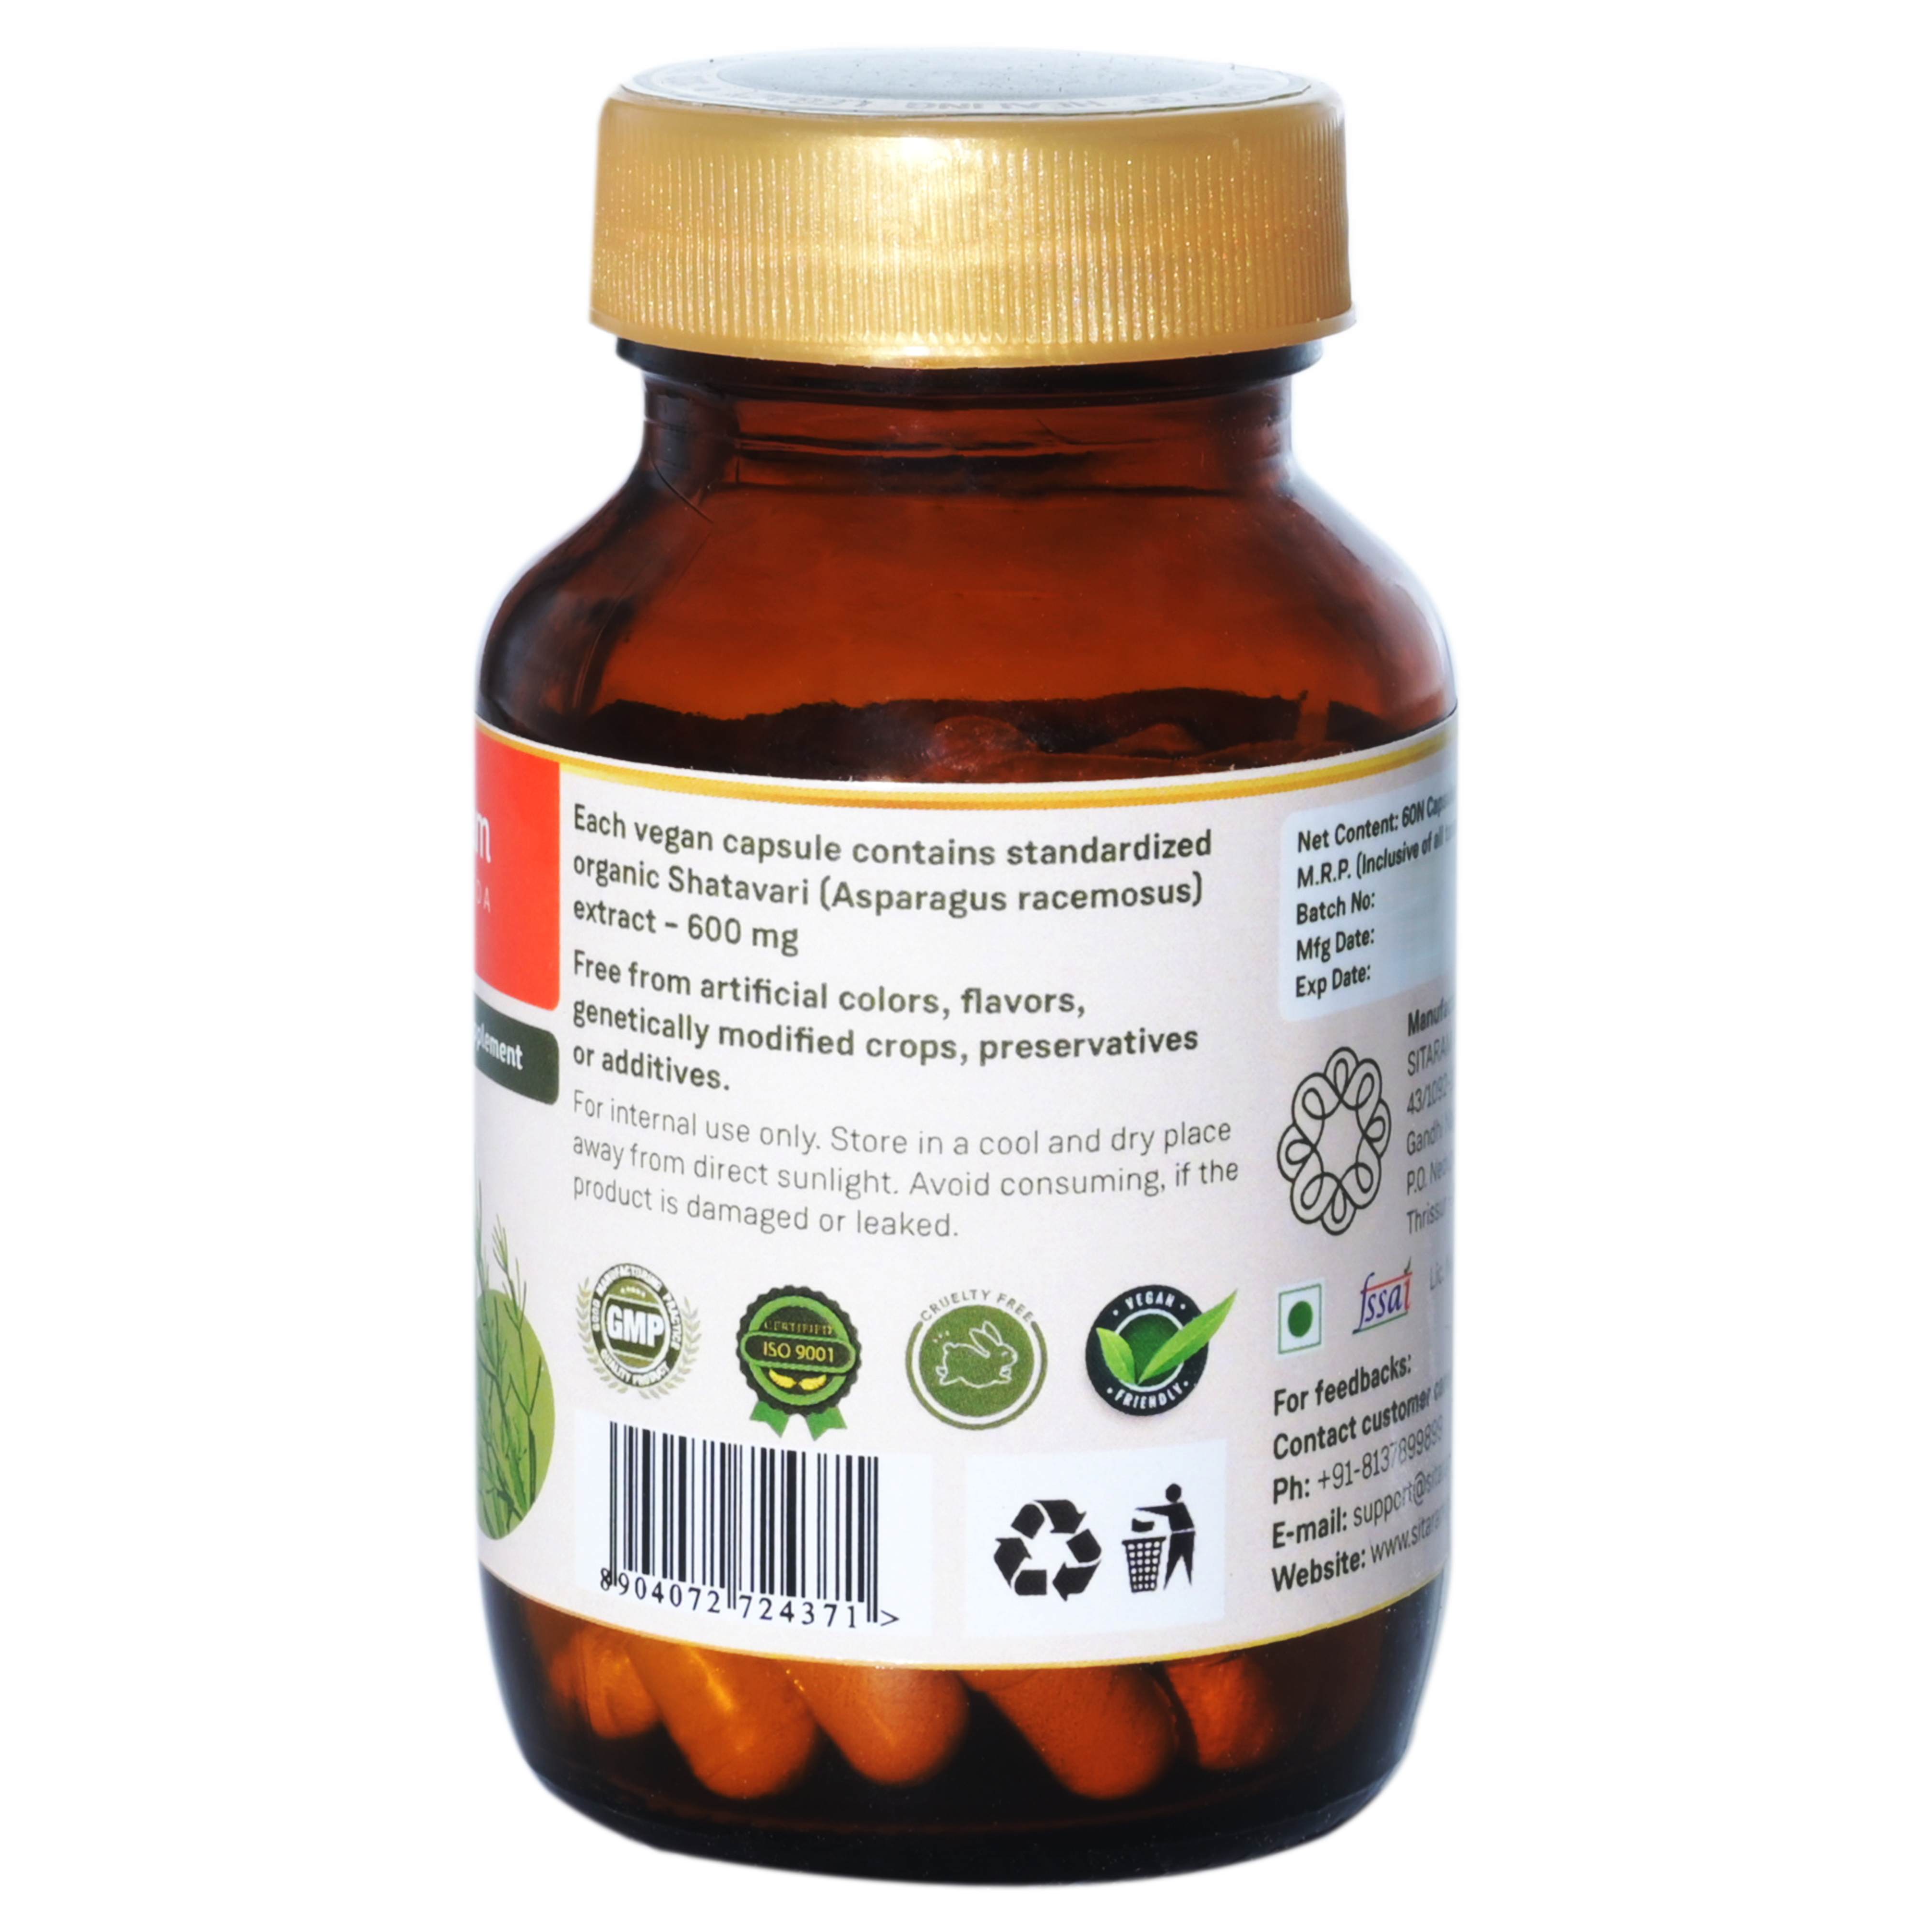 Sitaram Ayurveda Shatavari Capsule 60Nos (Prescription Medication)